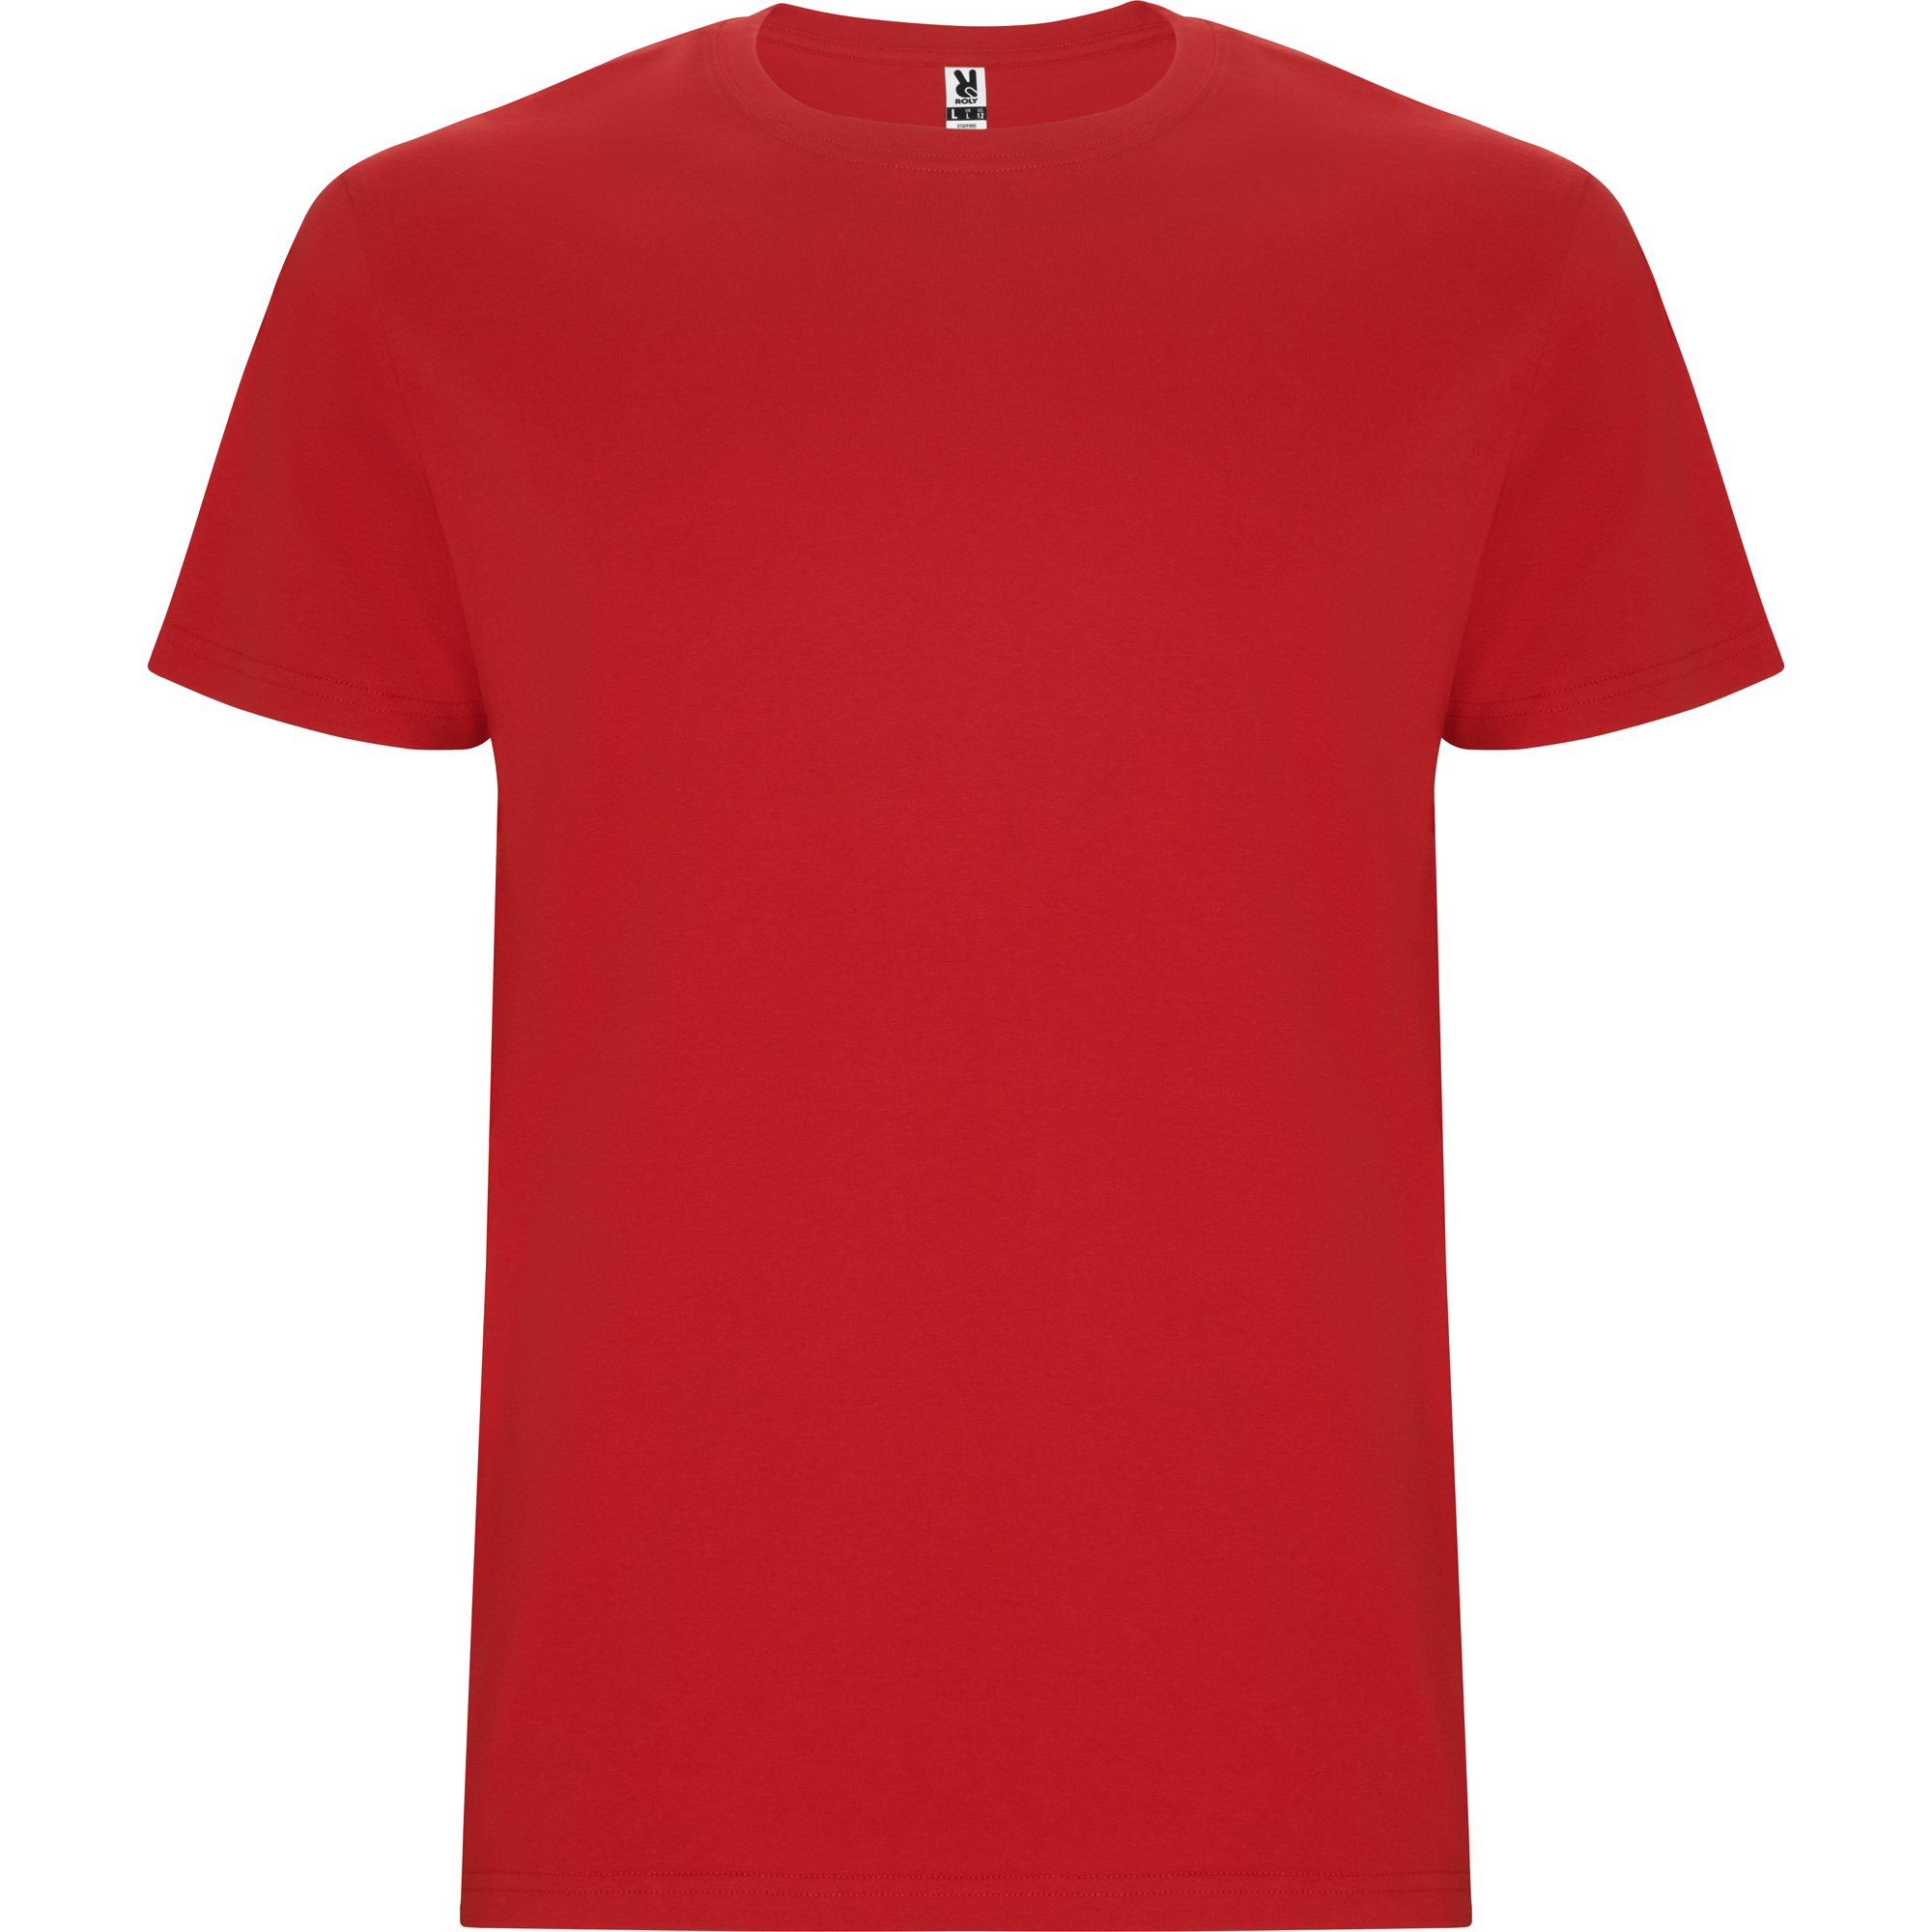 r6681-roly-stafford-t-shirt-tubolare-rosso.jpg